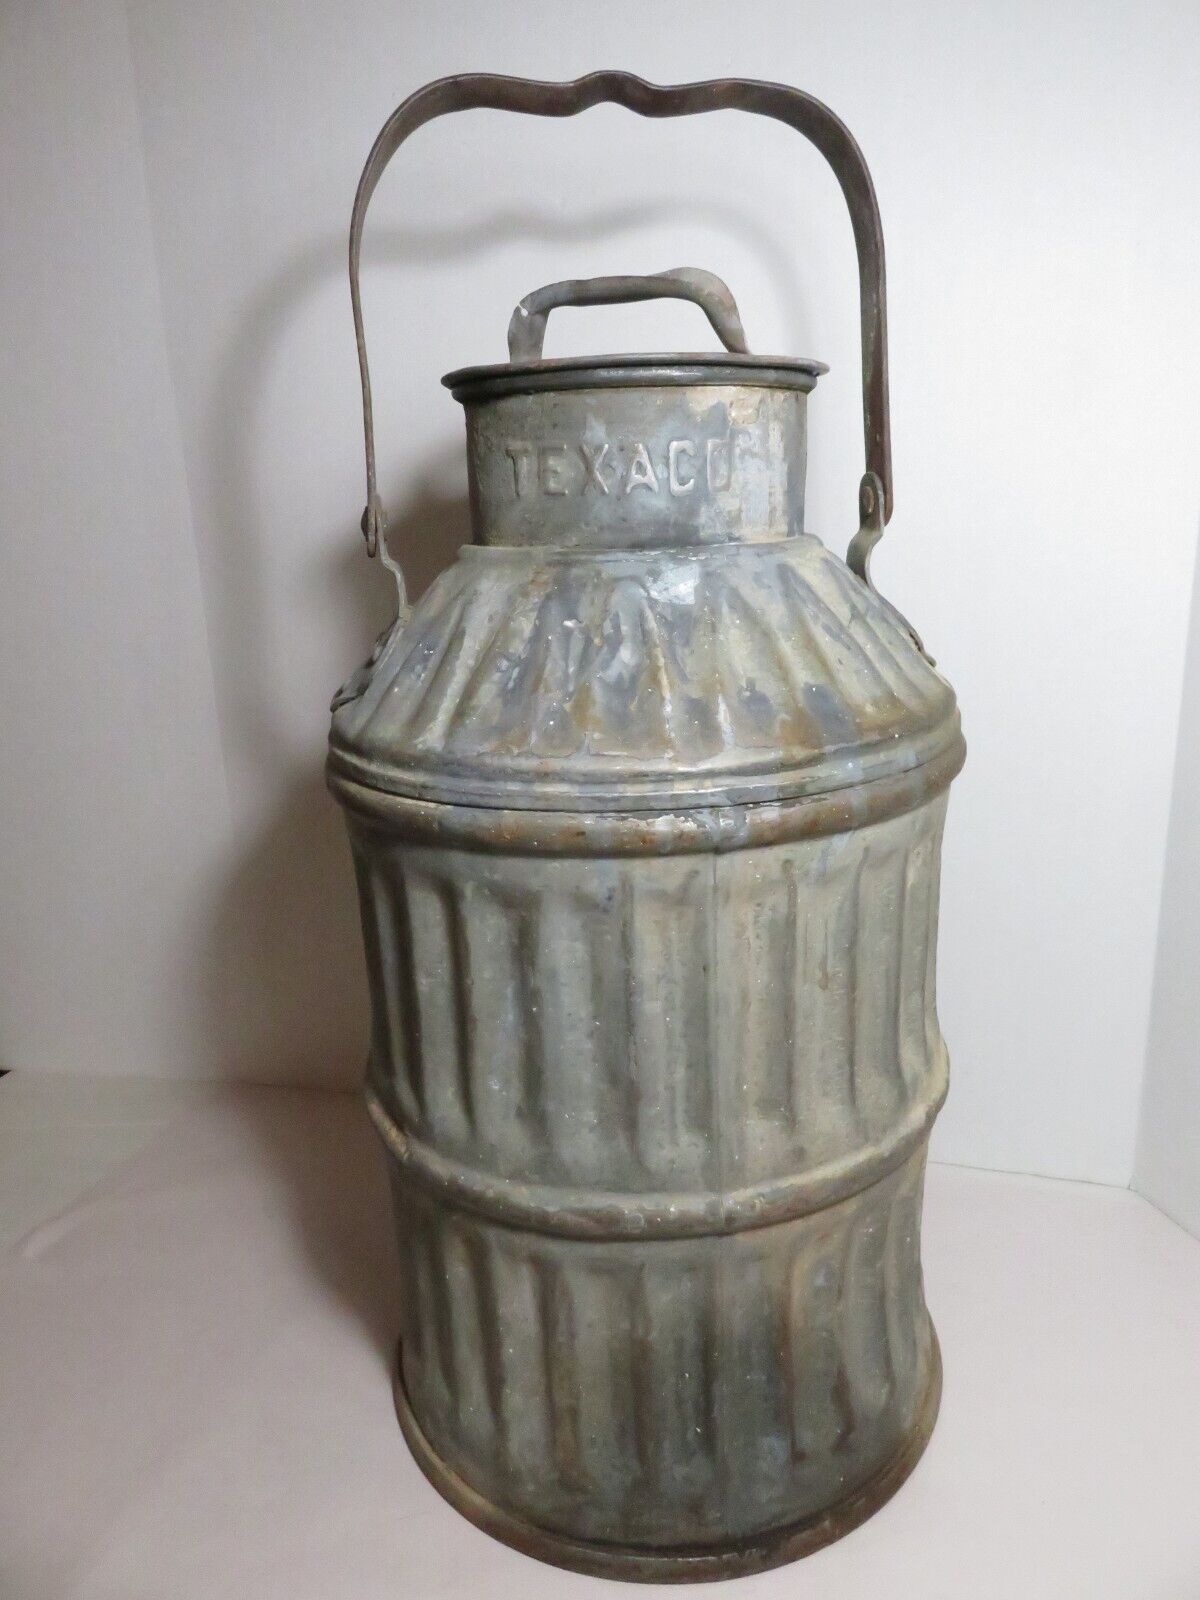 Vintage Boyco Texaco Five Gallon Galvanized Oil Can